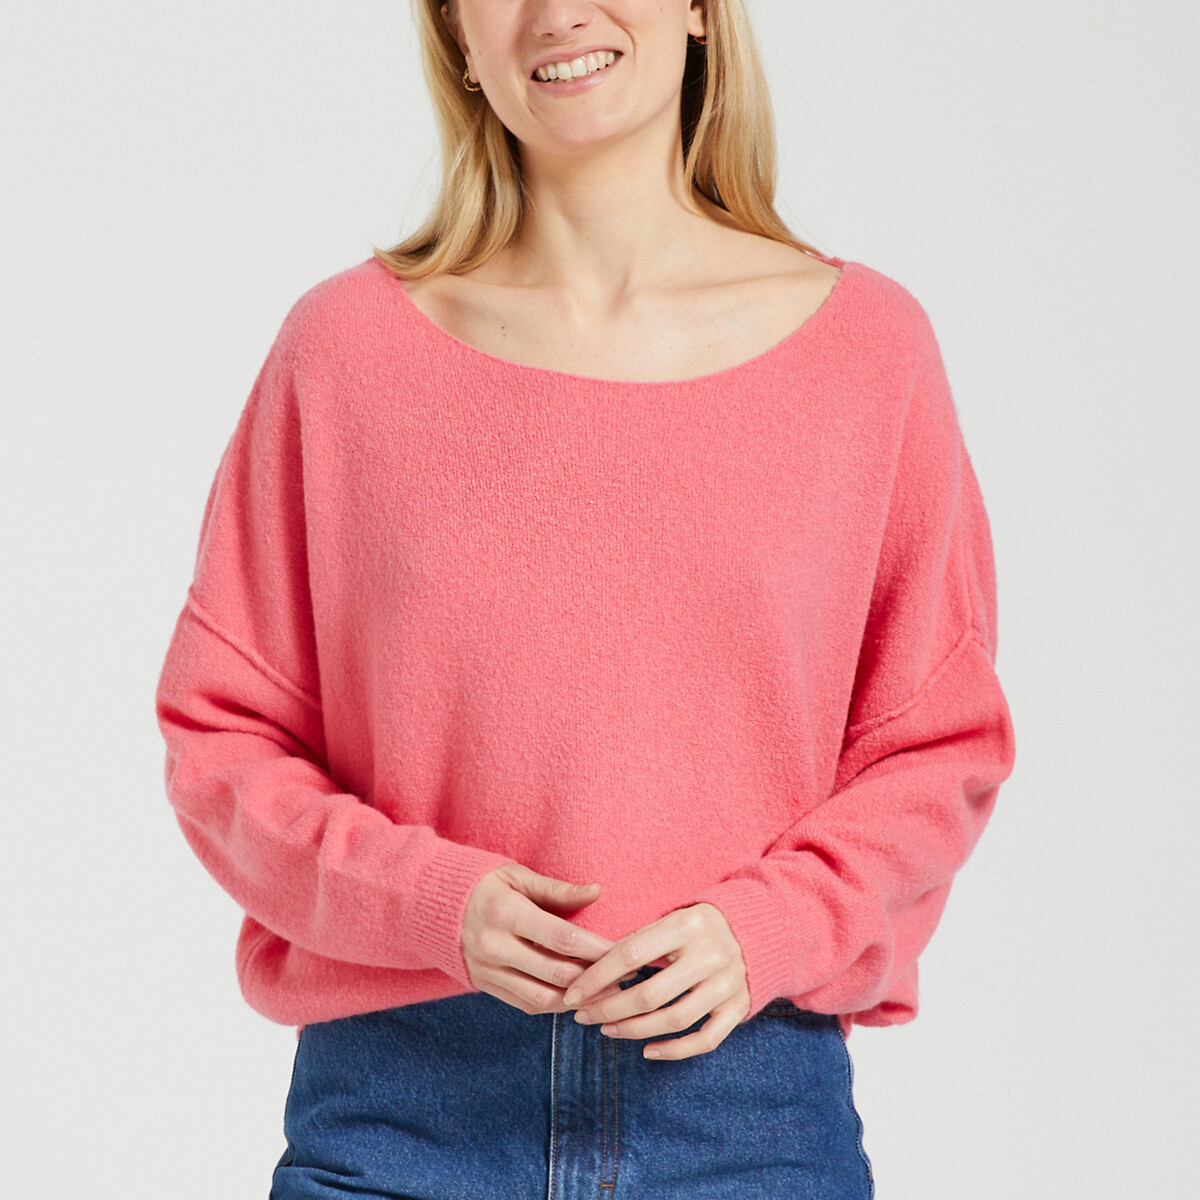 Пуловер с вырезом-лодочкой DAMSVILLE XS/S розовый пуловер с вырезом лодочка из плотного трикотажа damsville xs s серый